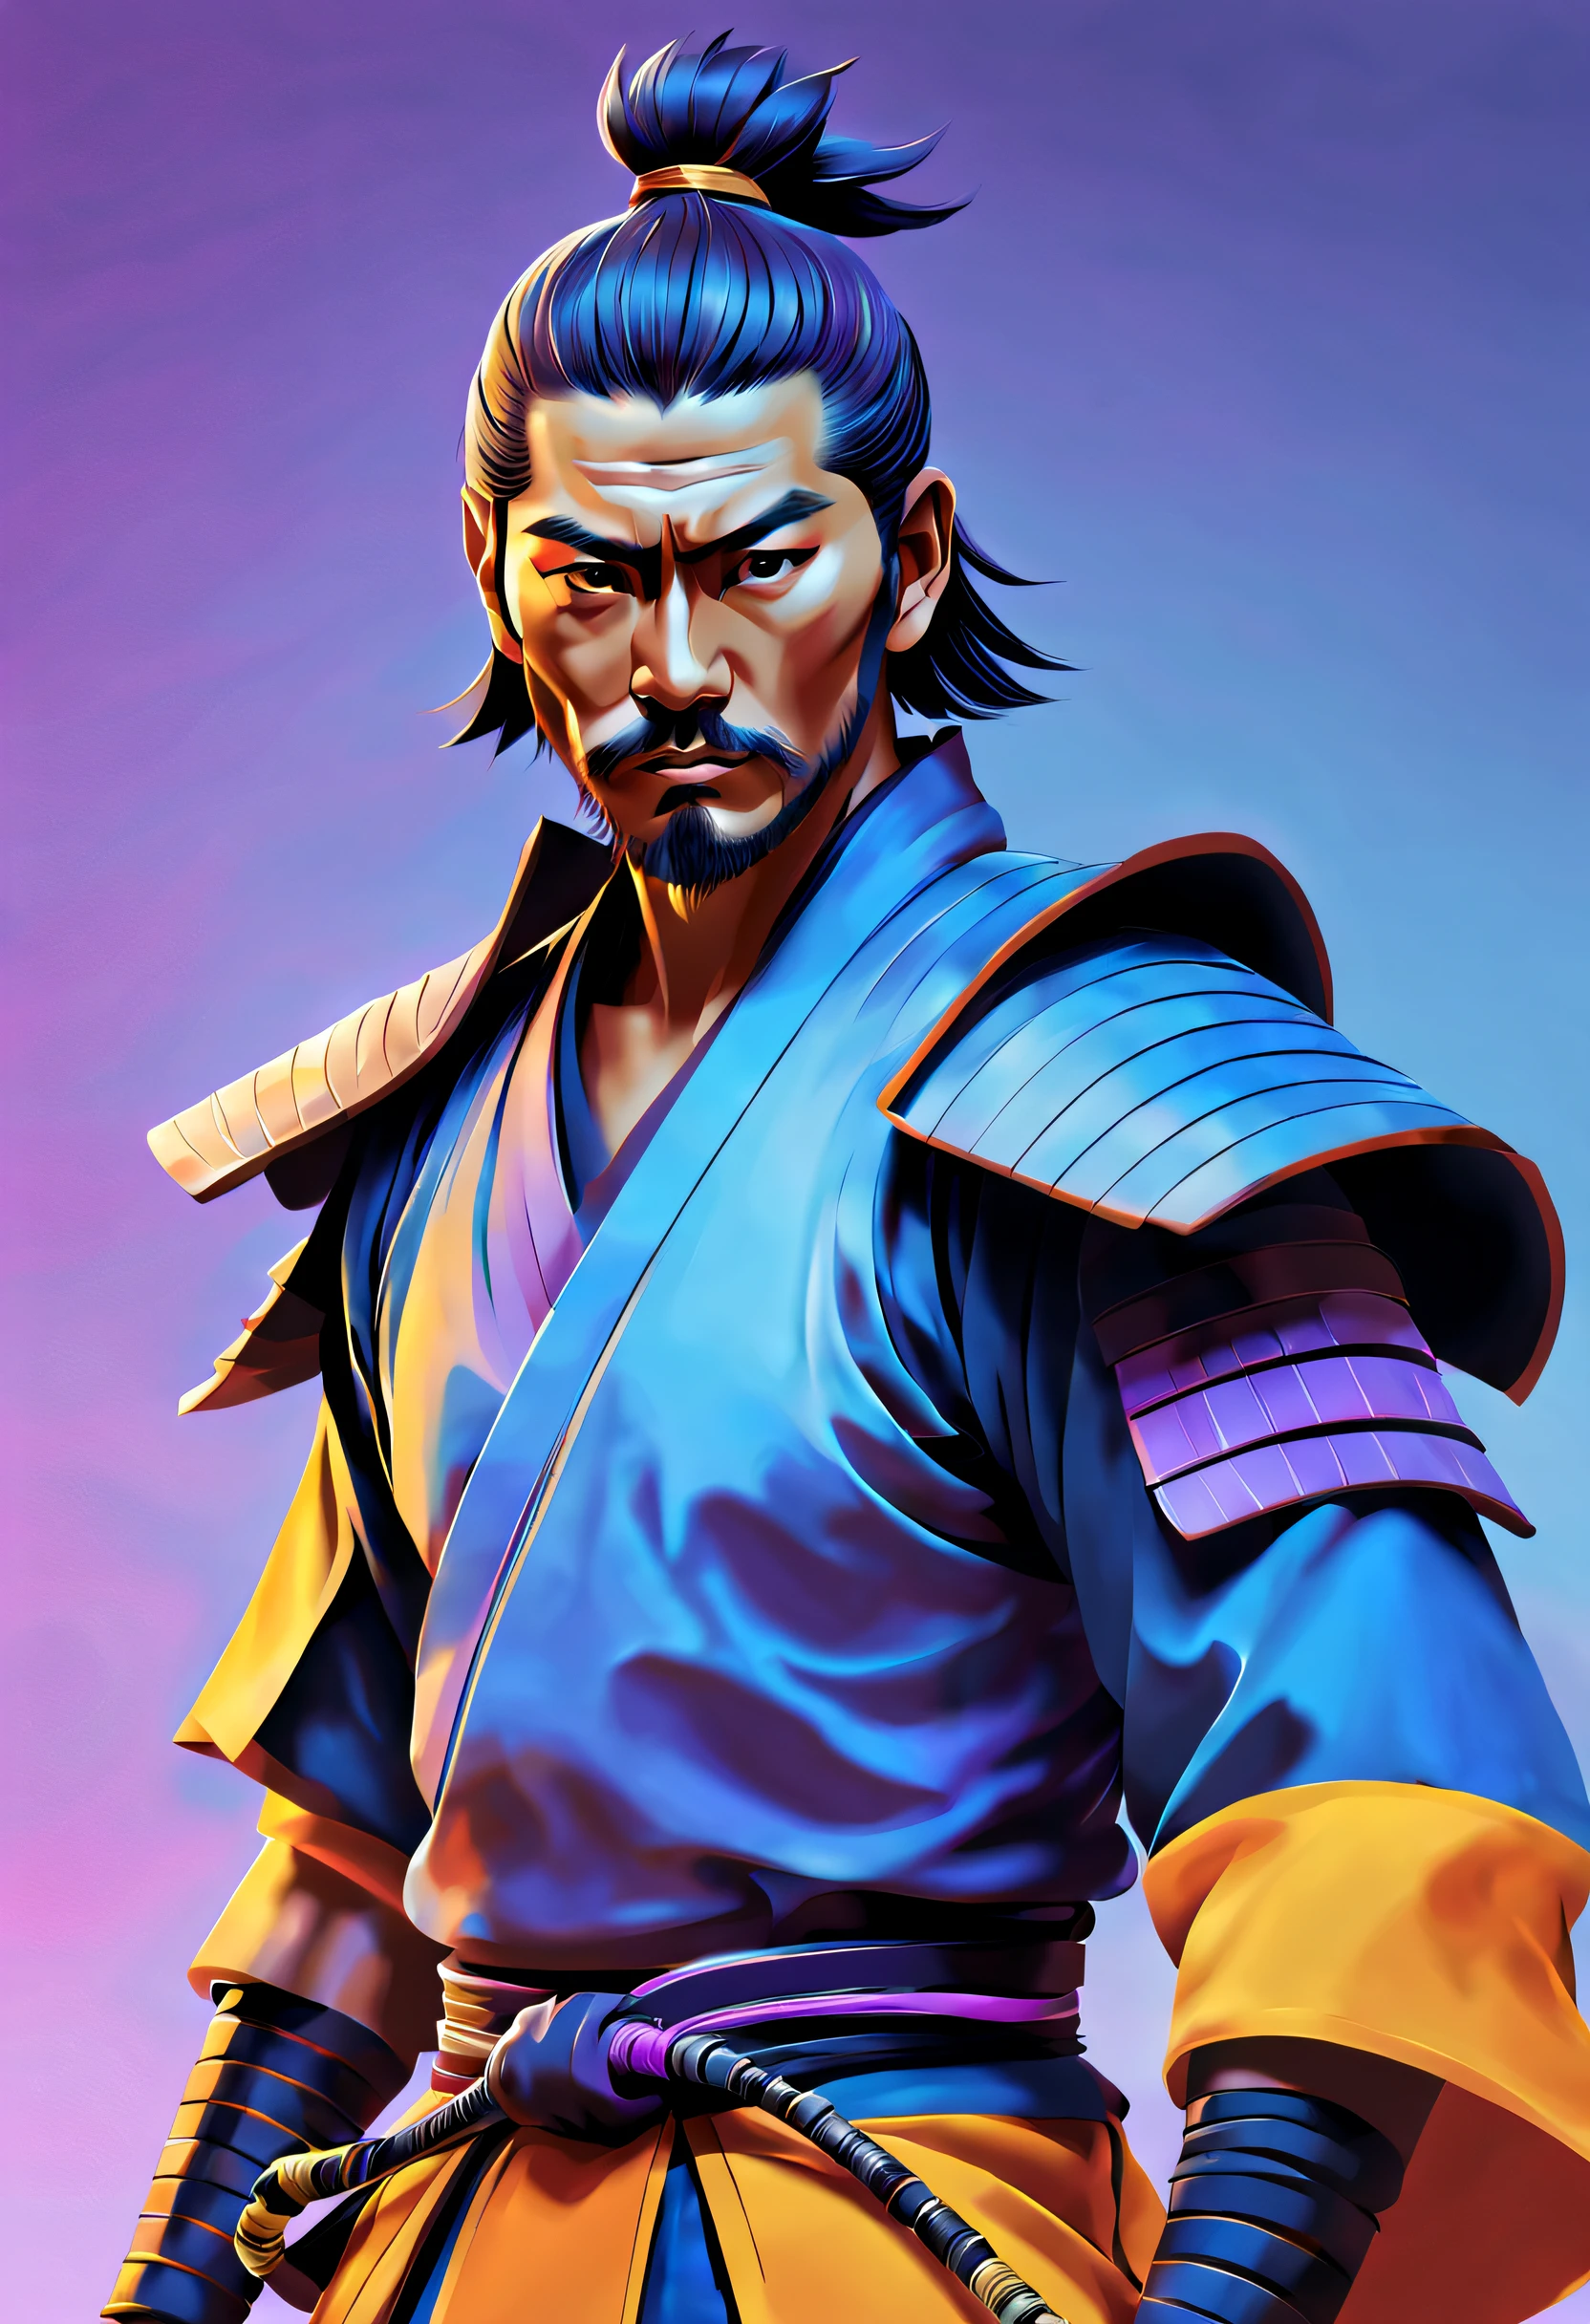 minimalista, pintura digital estilizada de um samurai masculino , arte multinível, cores vivas, azul, amarelo, violet, e cores laranja, ilustração de estilo vetorial superflat, iluminação cinematográfica. design de camiseta.